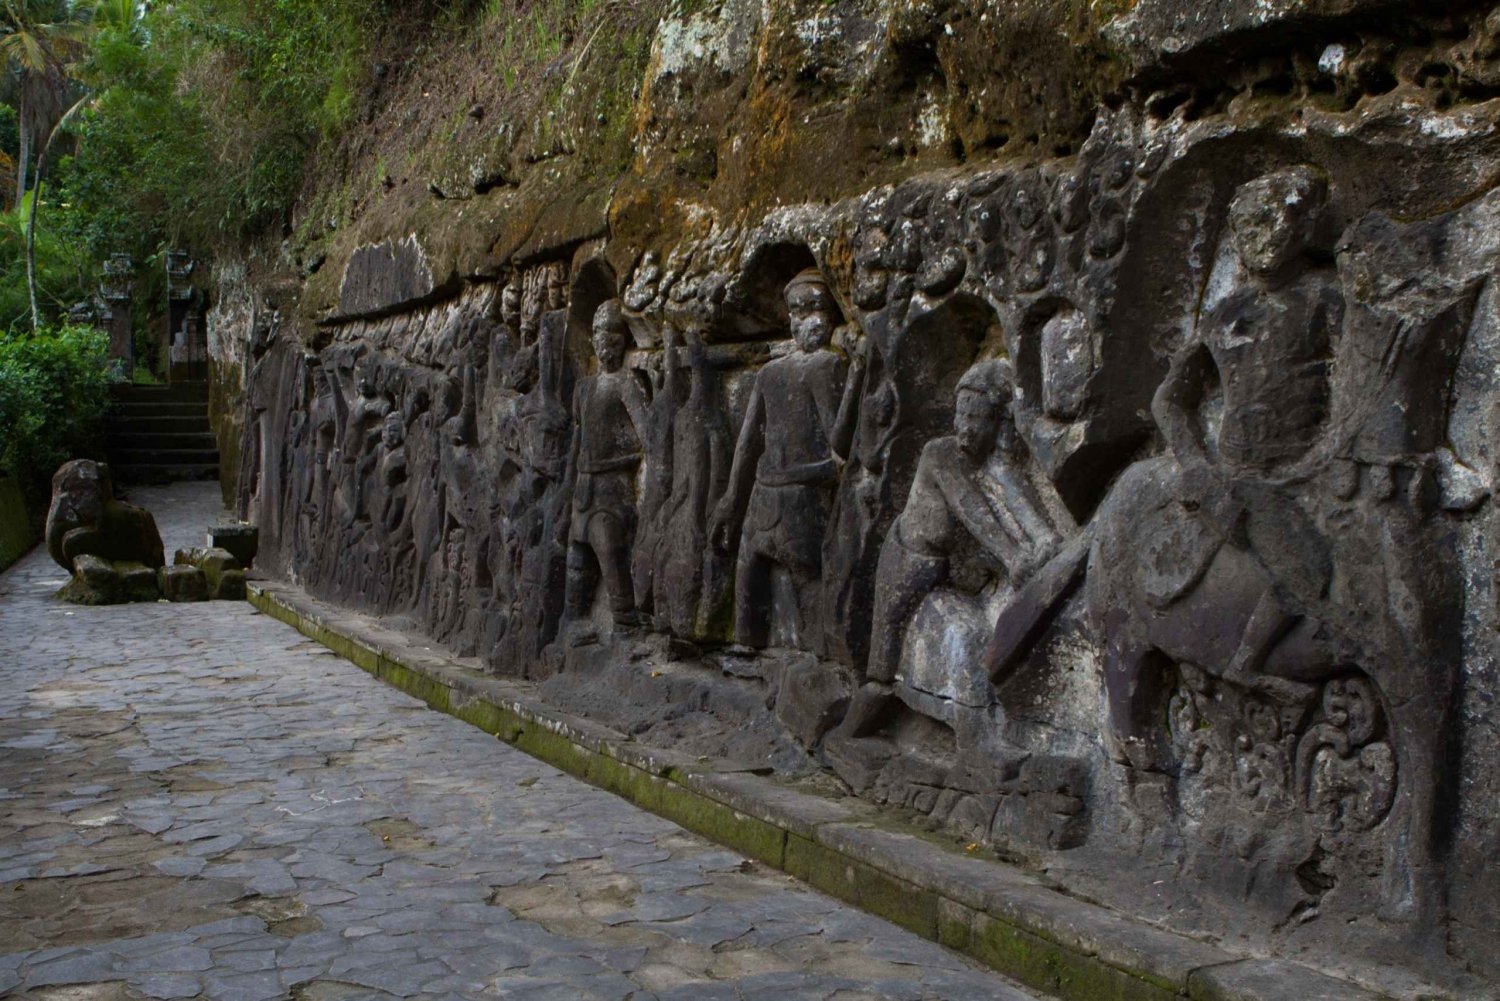 Bali: Archeological Museum & UNESCO Temples Private Tour